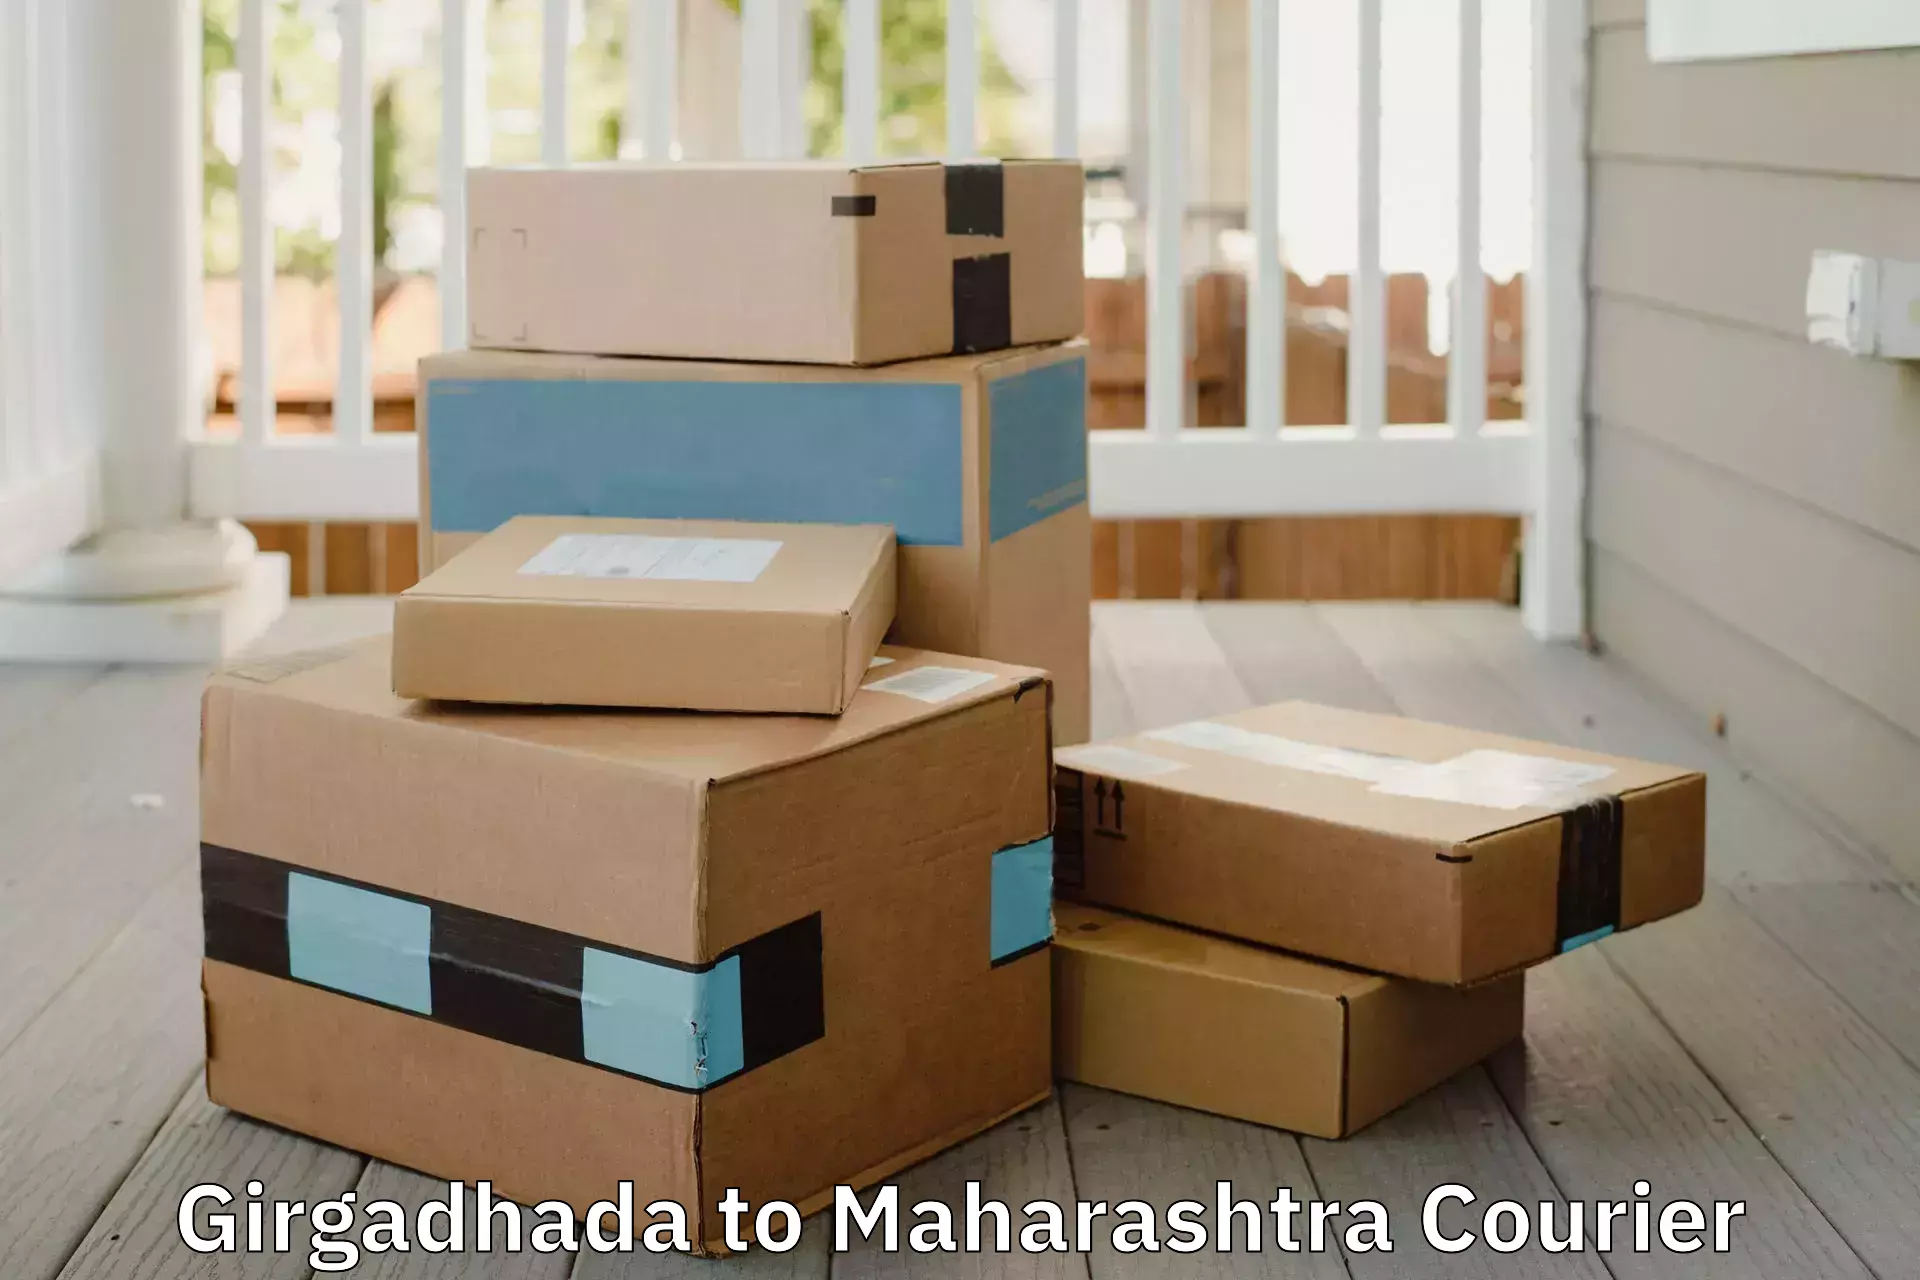 Skilled furniture transporters Girgadhada to Mumbai Port